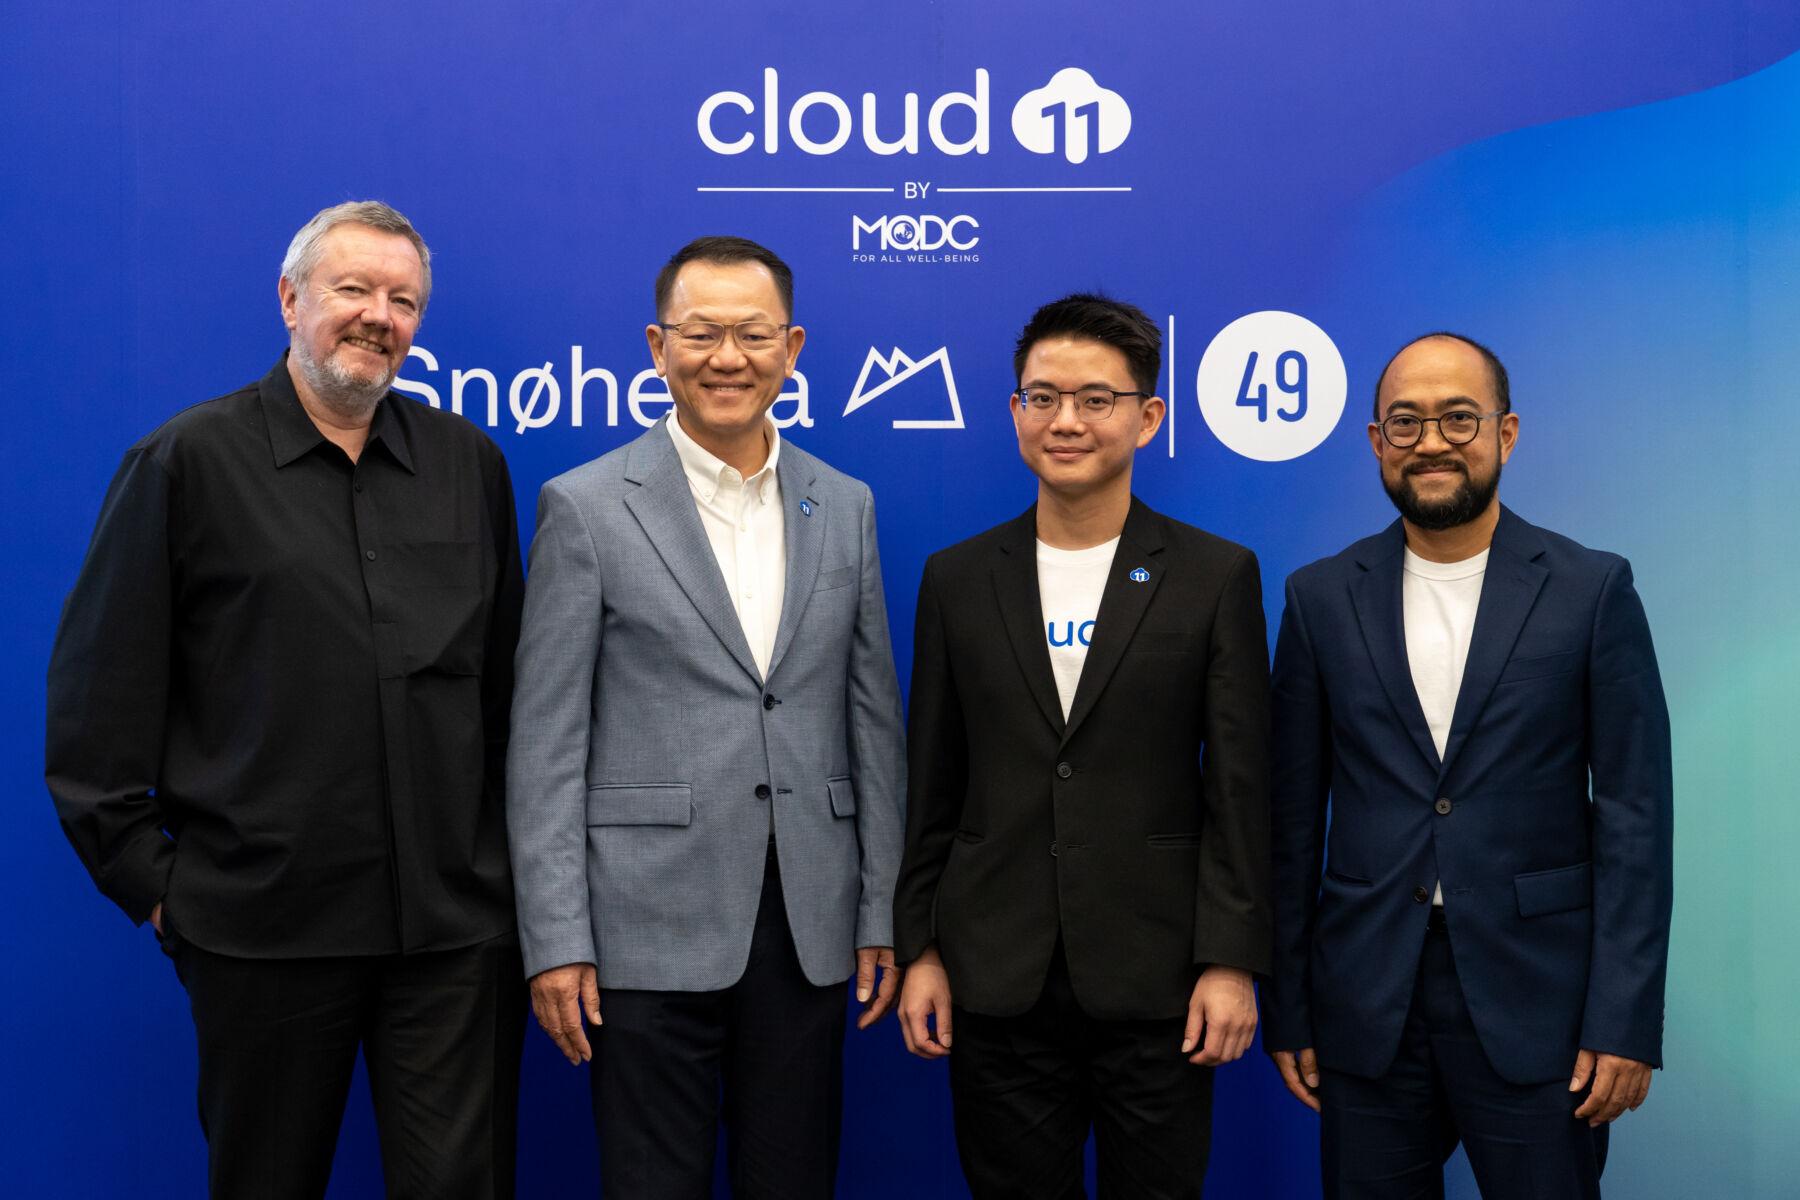 Cloud 11 Interview